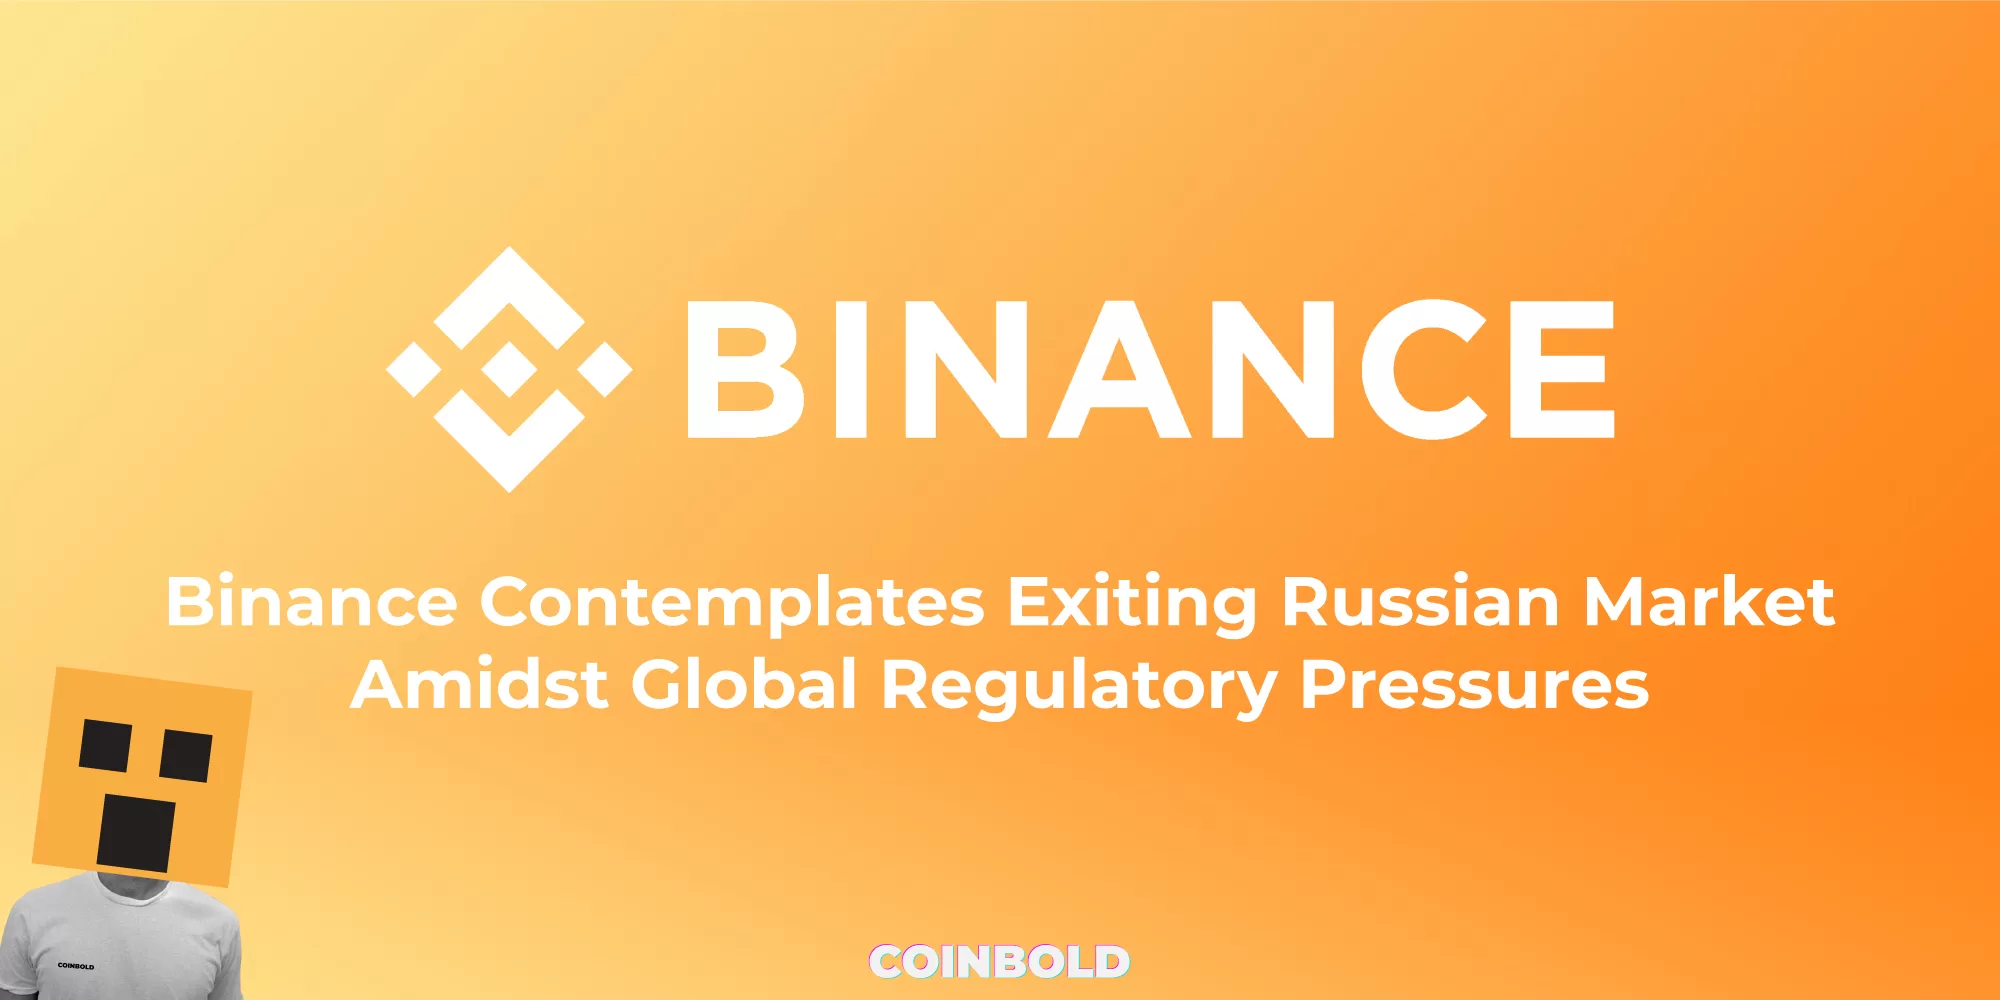 Binance Contemplates Exiting Russian Market Amidst Global Regulatory Pressures